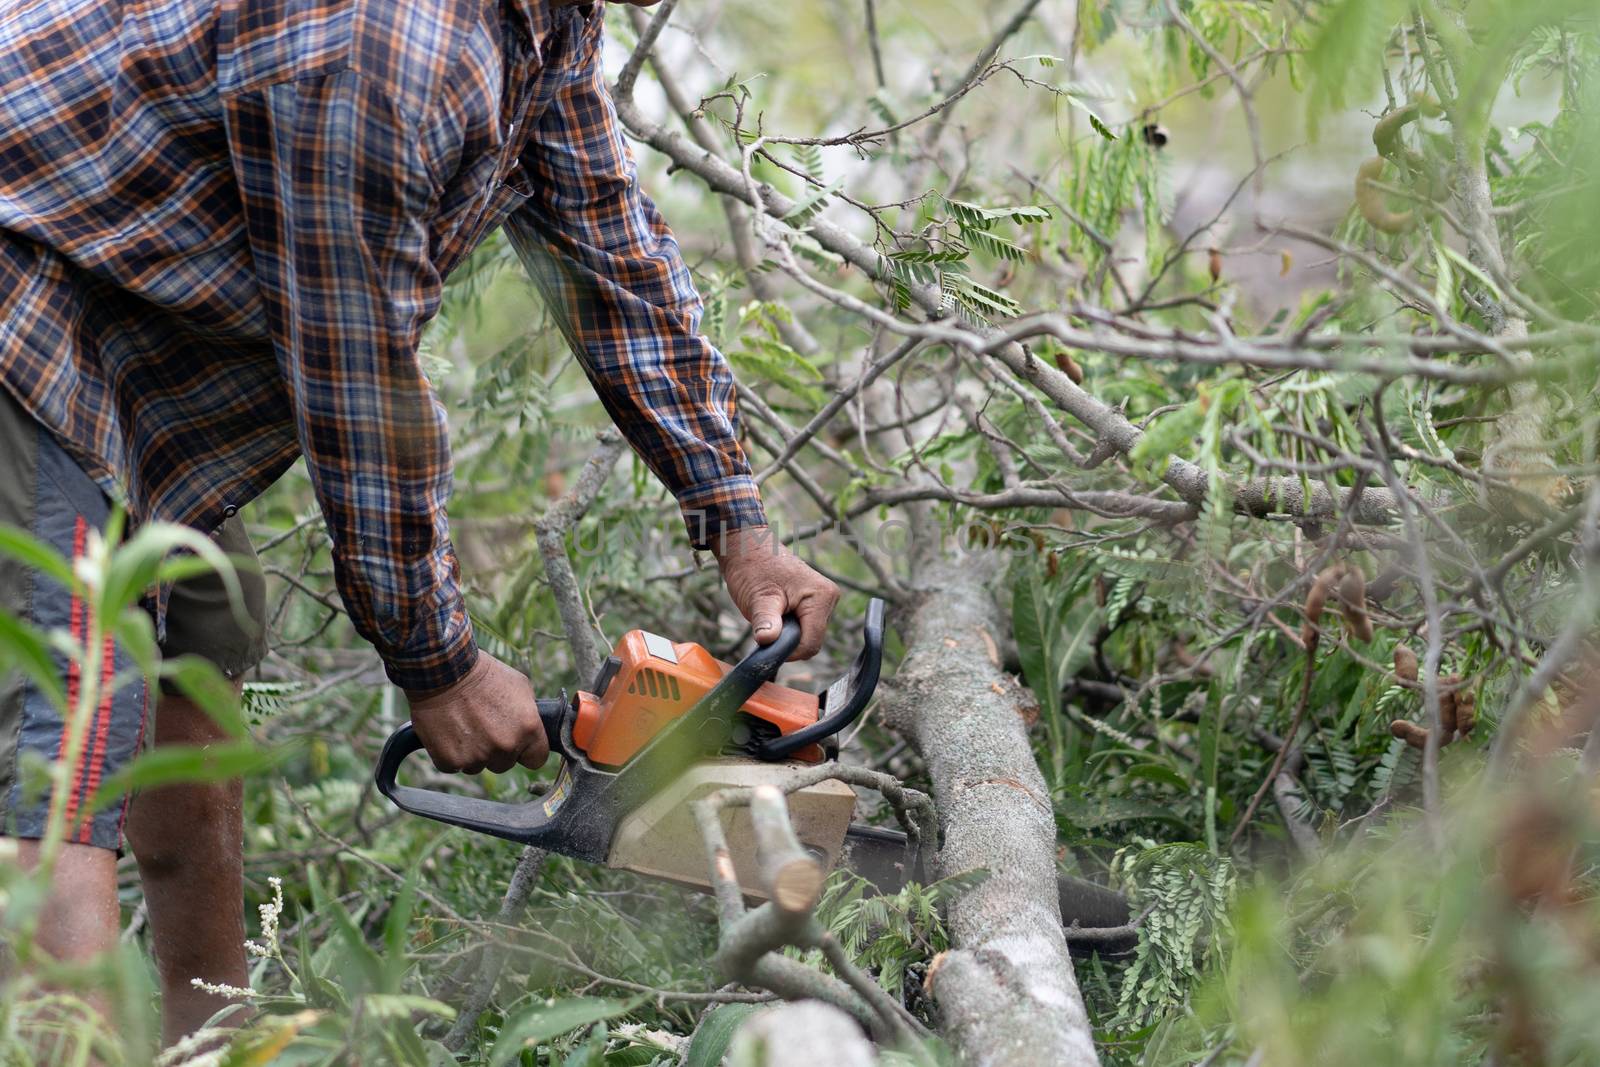 Lumberjack using machine saw. Man using machine saw while cutting tree.